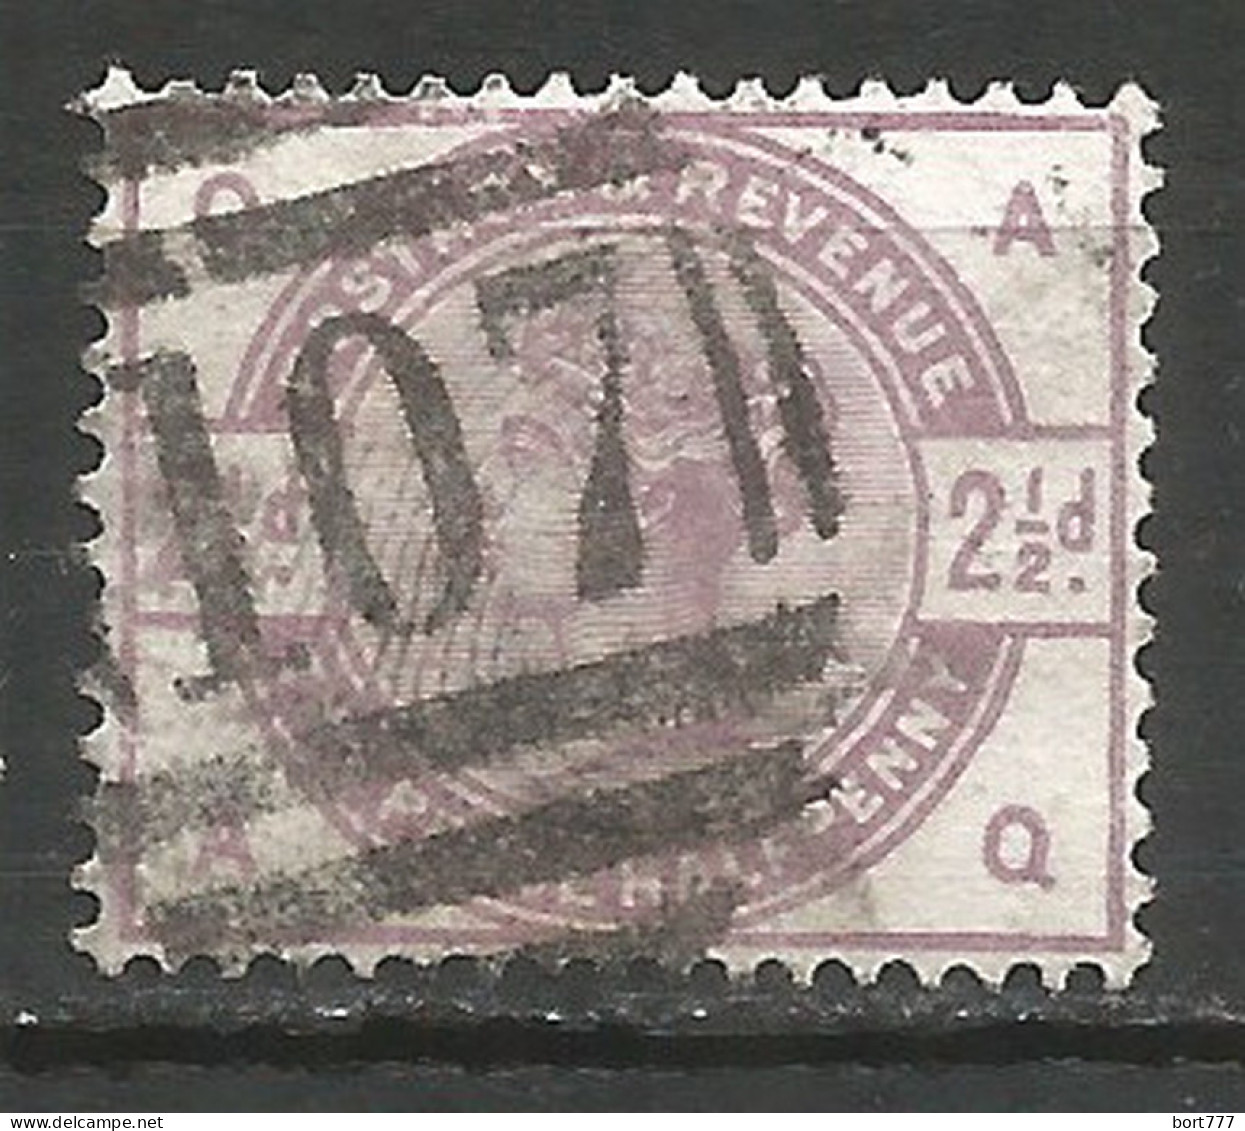 Great Britain 1884 Year Used Stamp - Usati